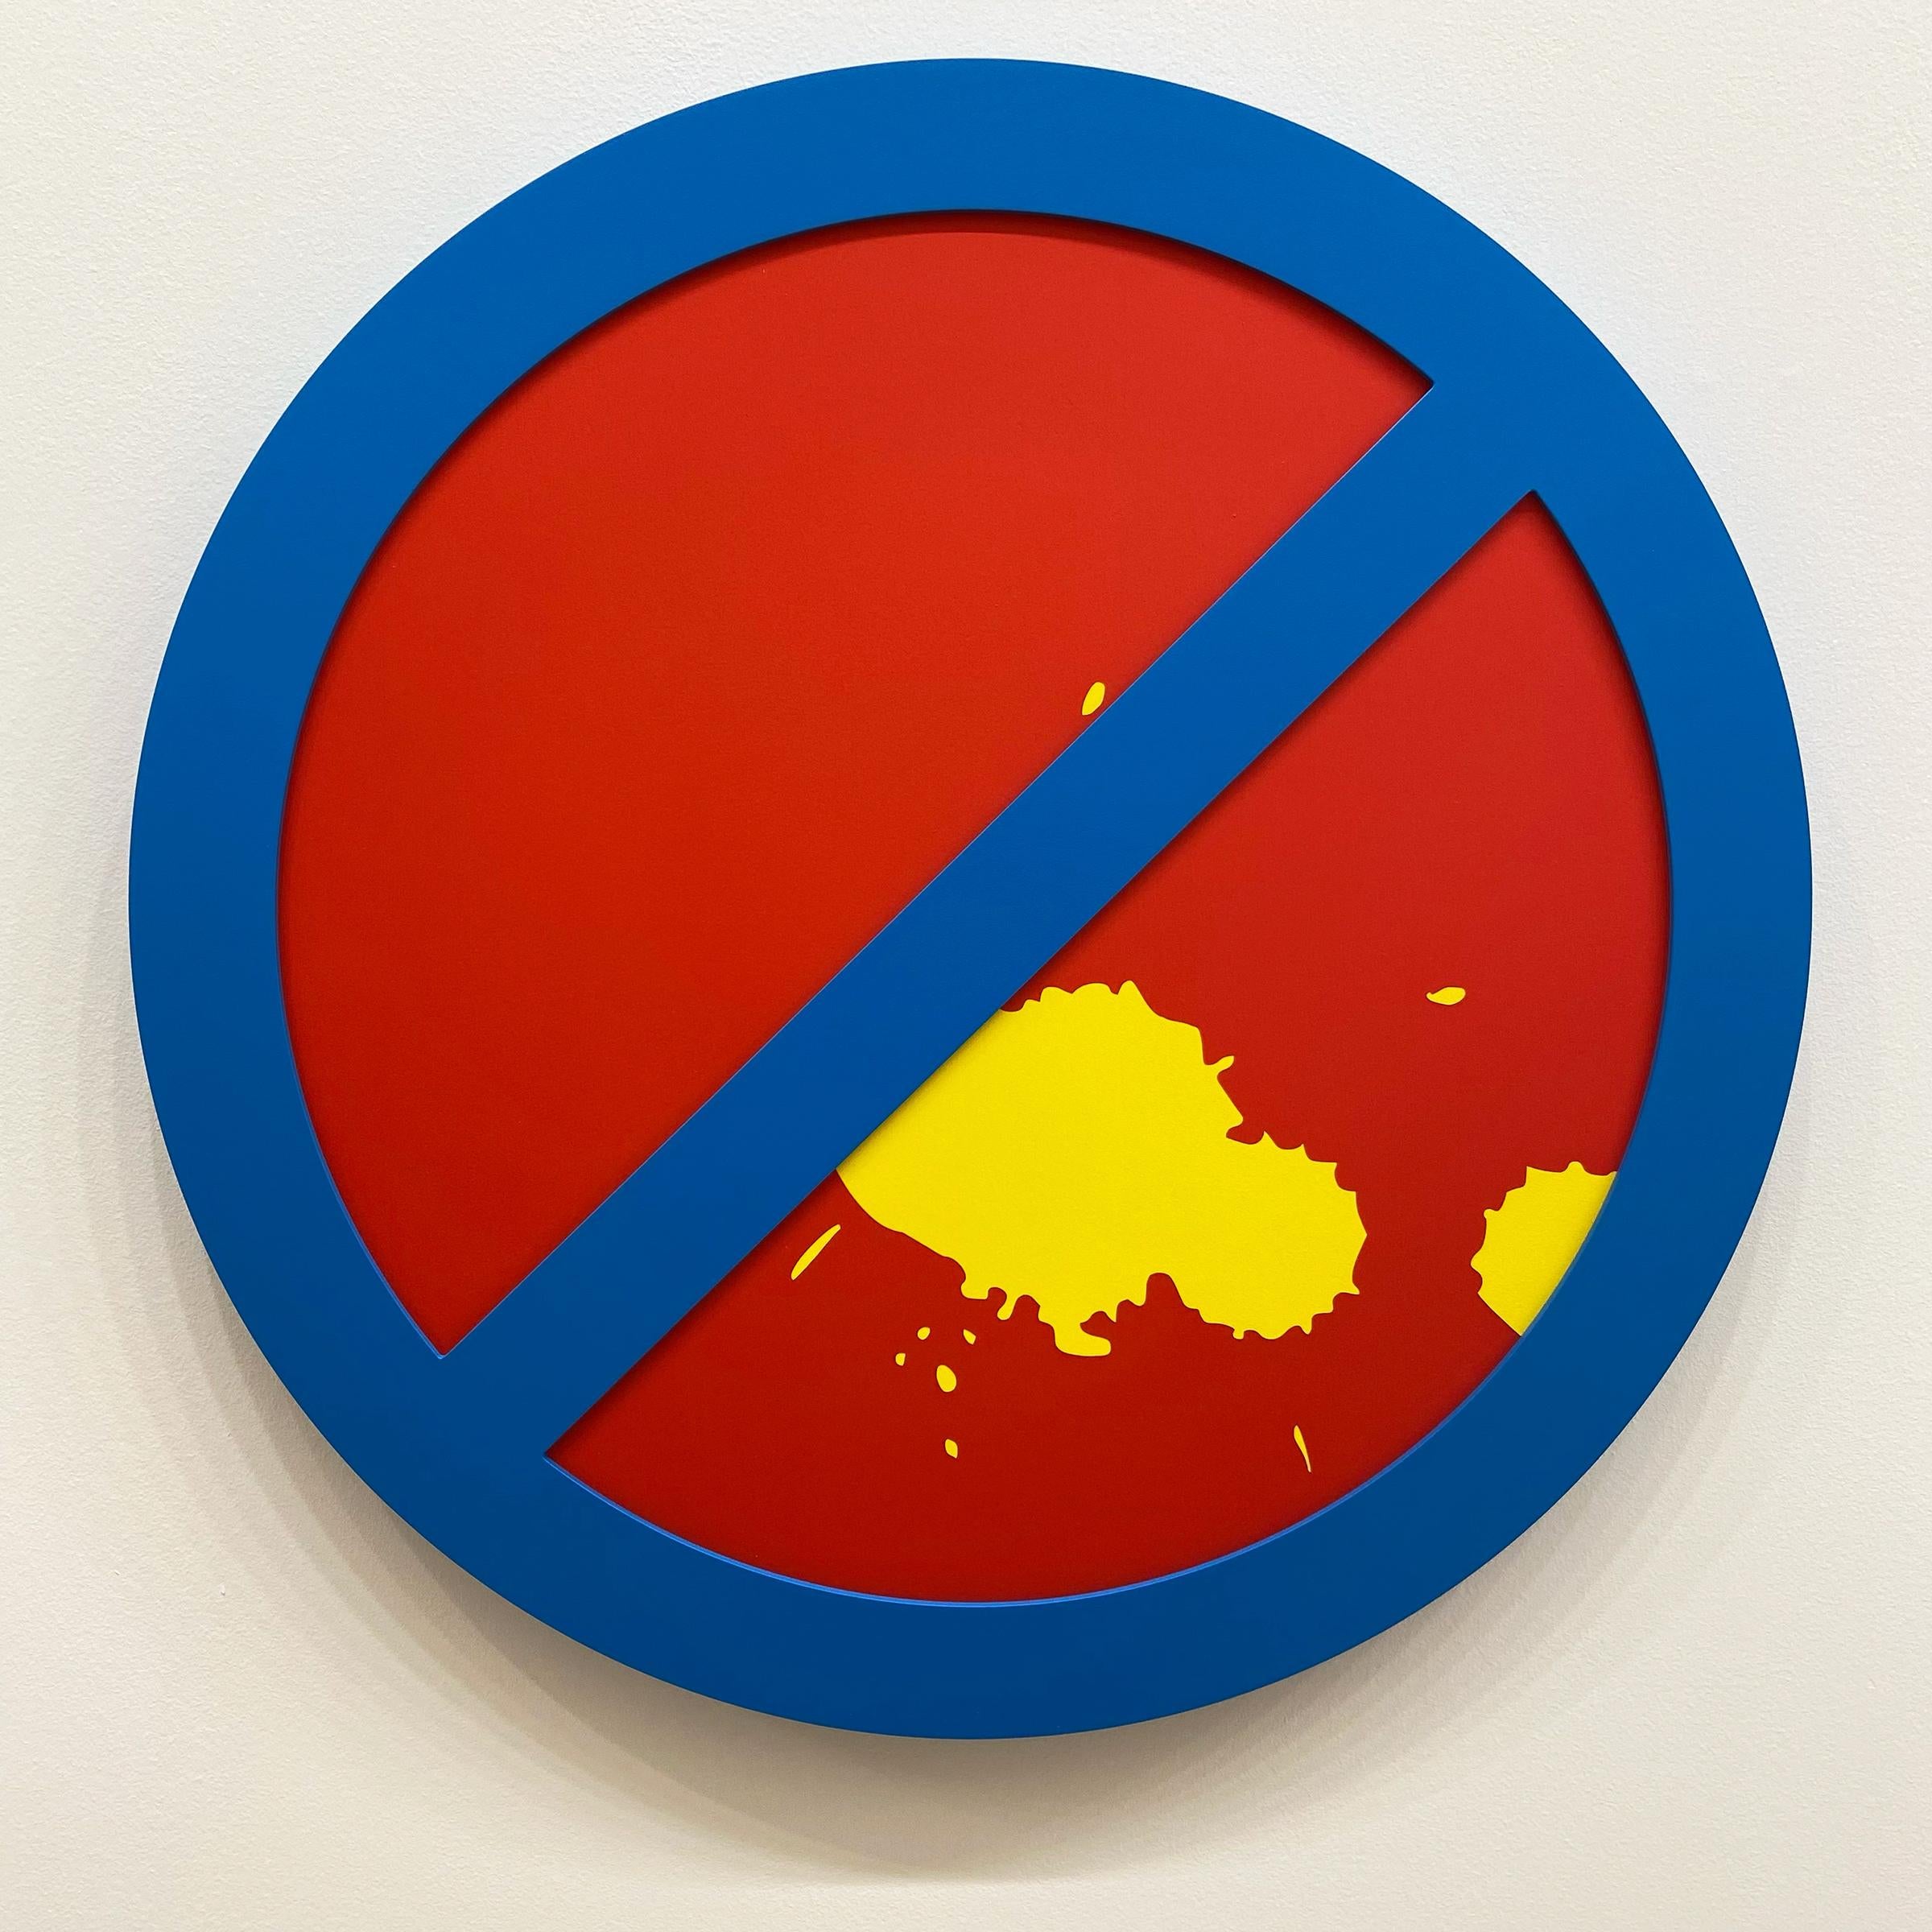 Michael Porten Portrait Painting - "No Porten (Yellow on Blue)" - conceptual art, wall sculpture - Lawrence Weiner